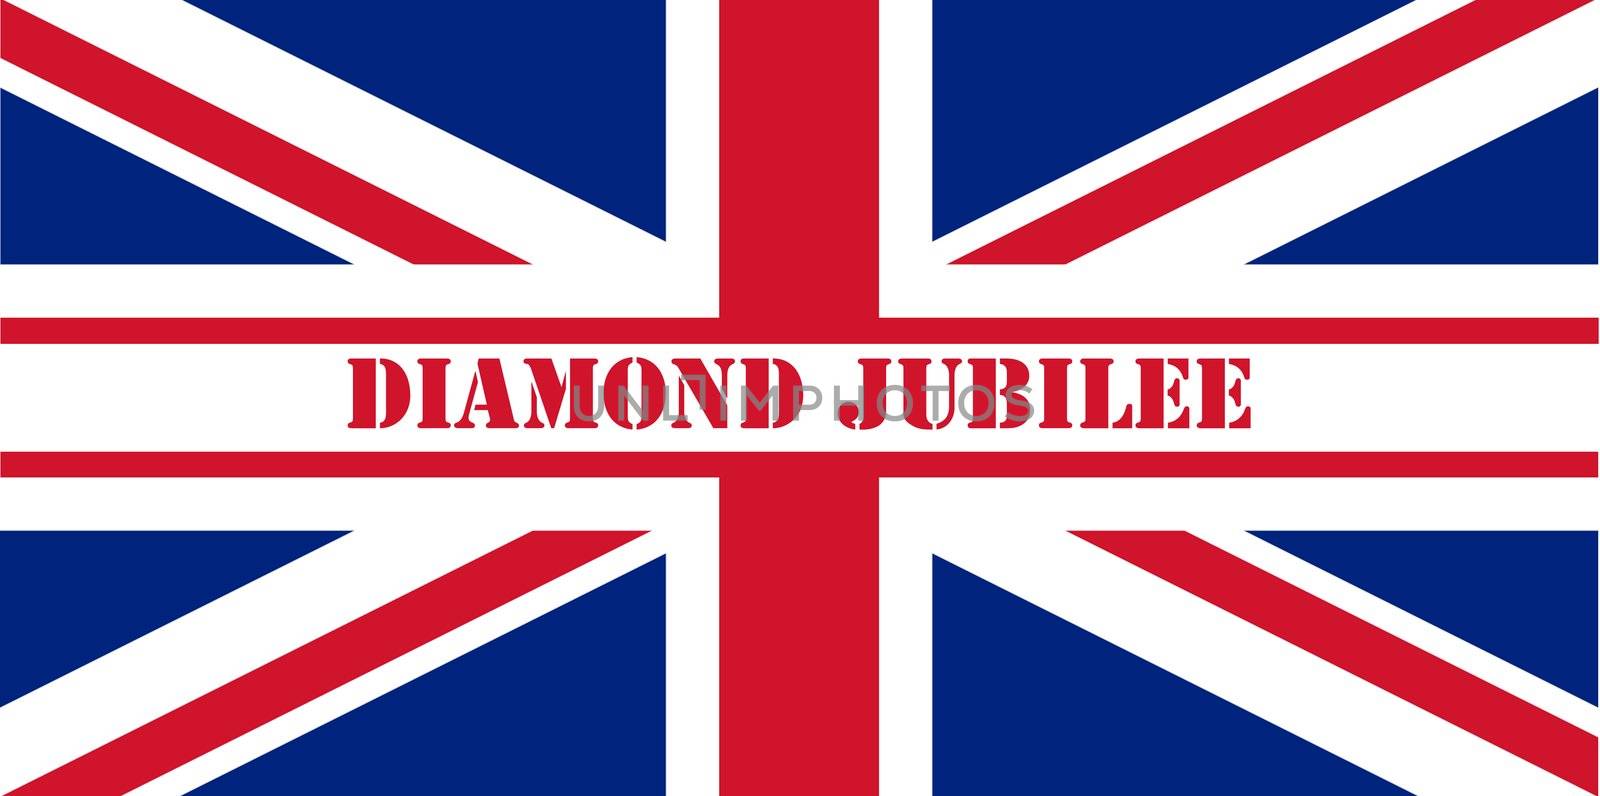 Diamond Jubilee Union Jack flag by speedfighter